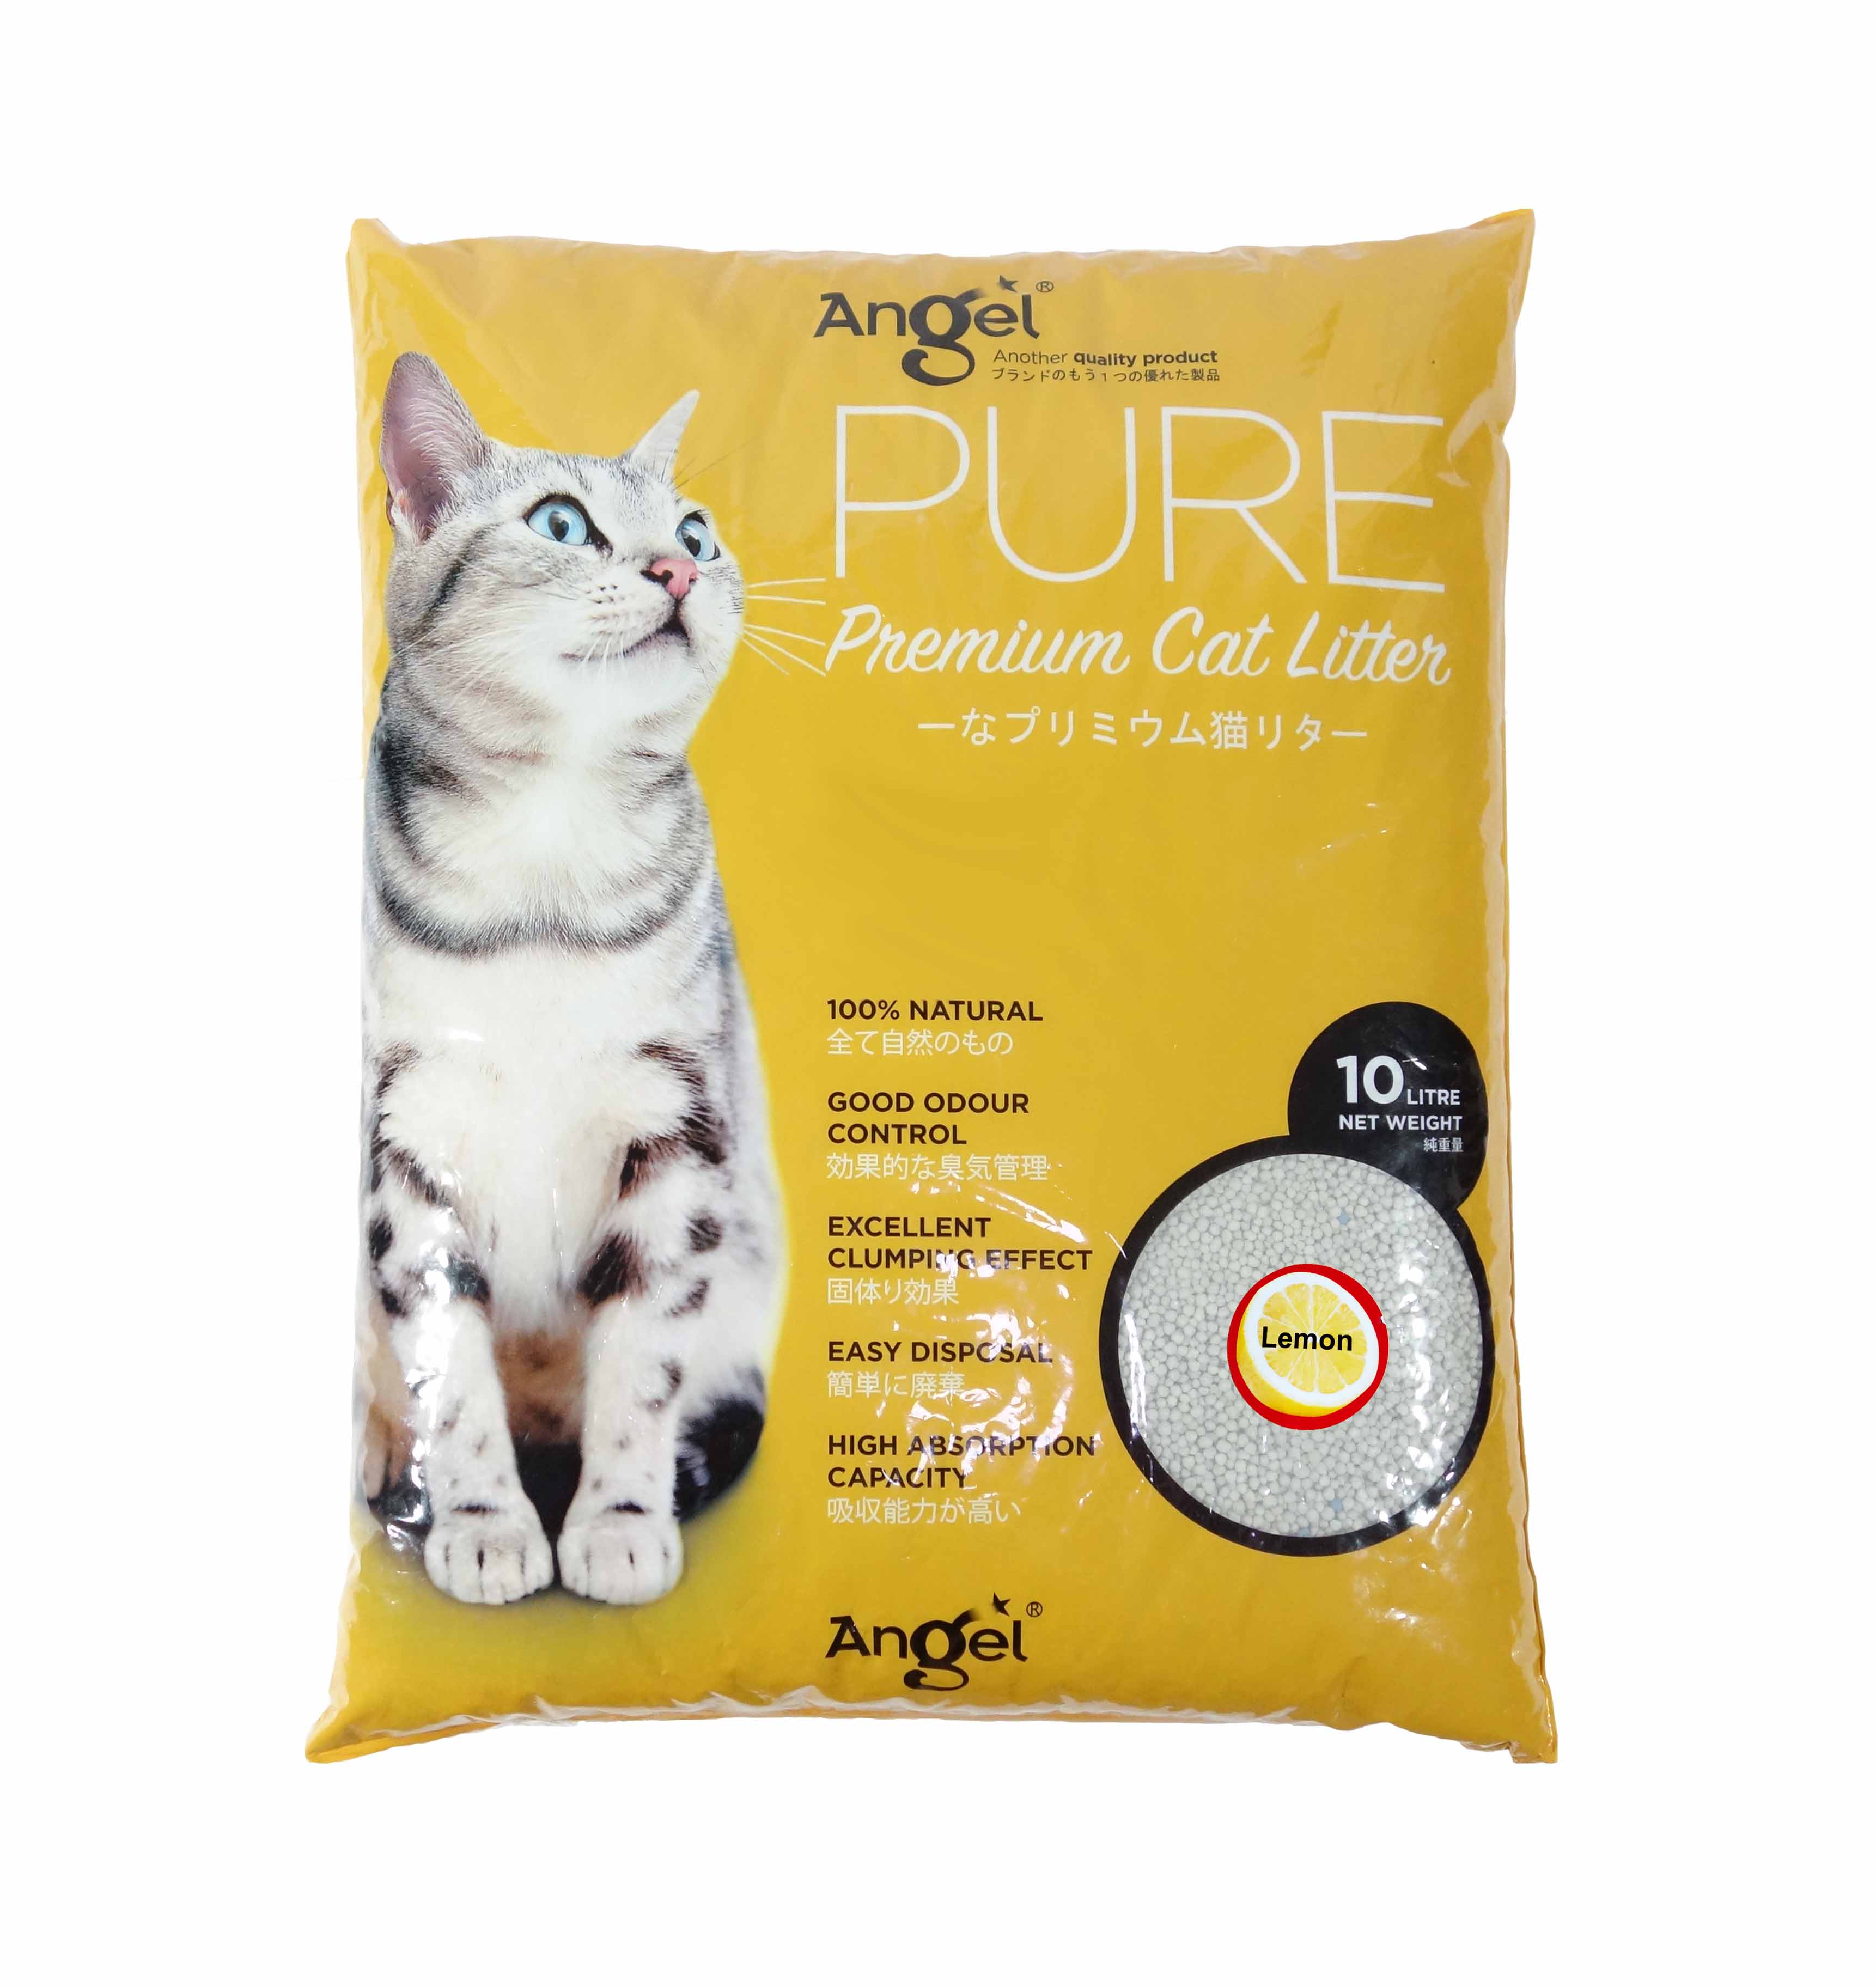 Angel Pure Premium Cat Litter 10L Lemon Scented